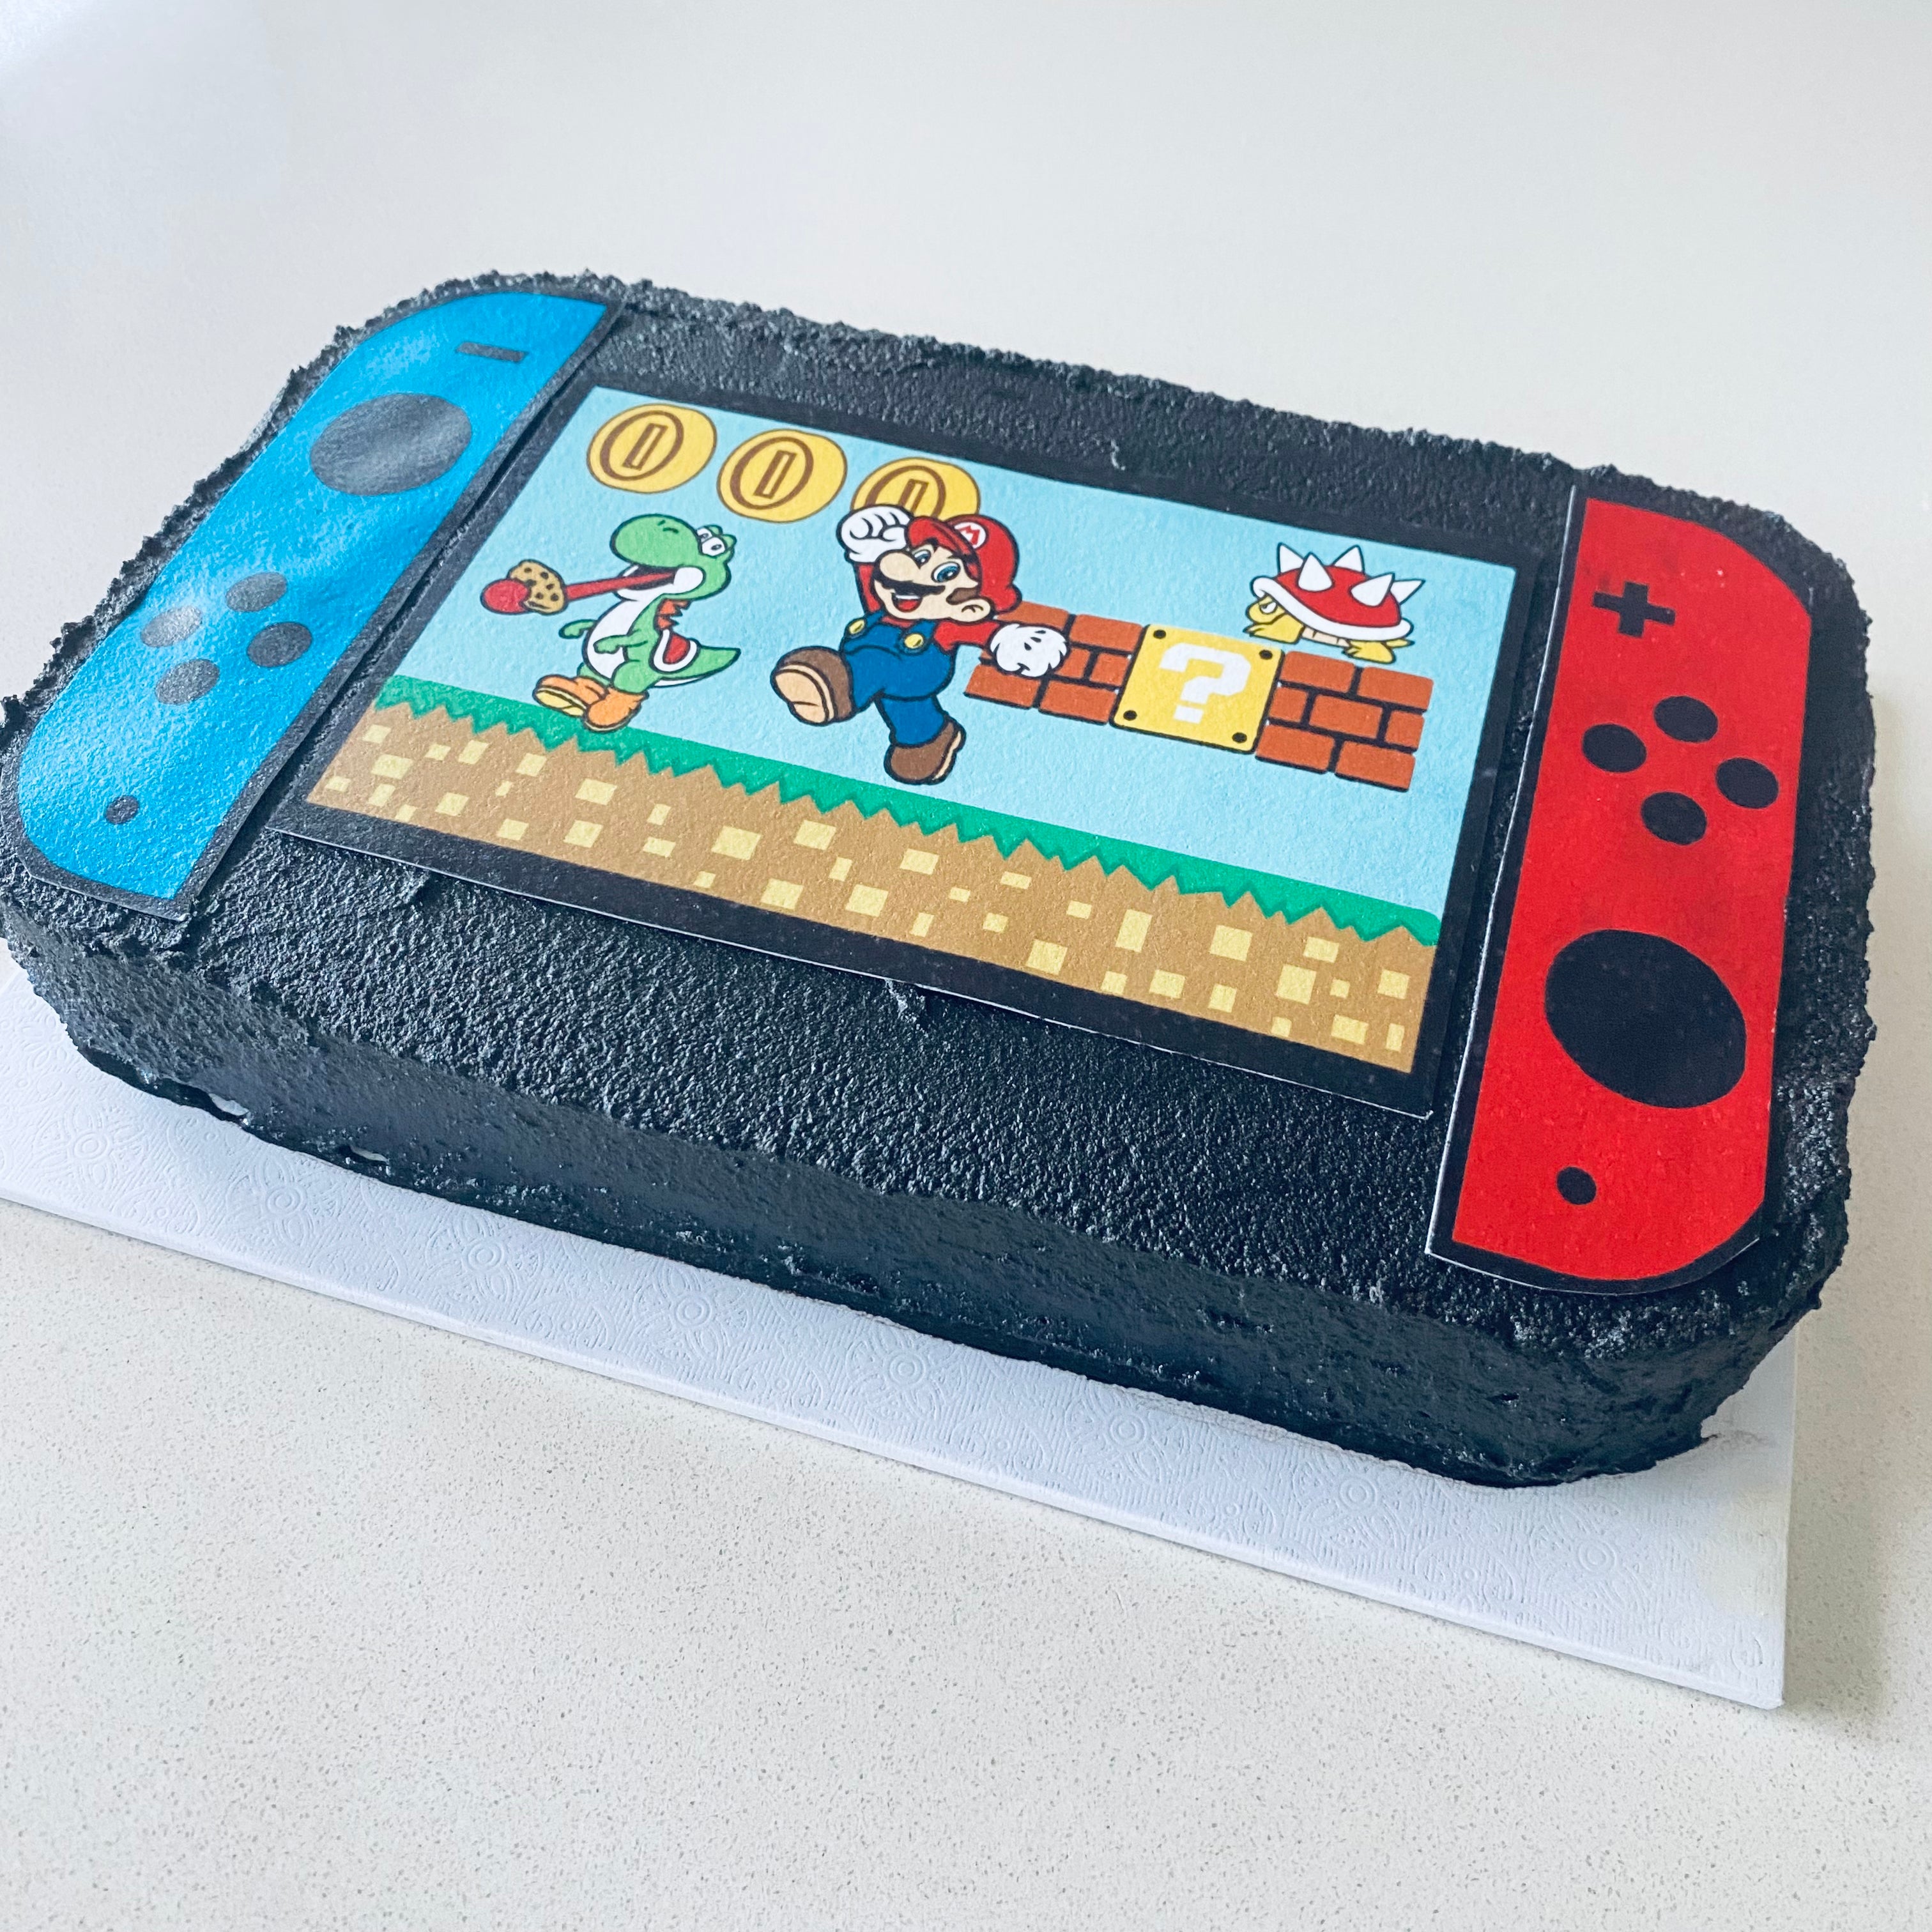 Nintendo Switch - We Create Delicious Memories - Oakmont Bakery